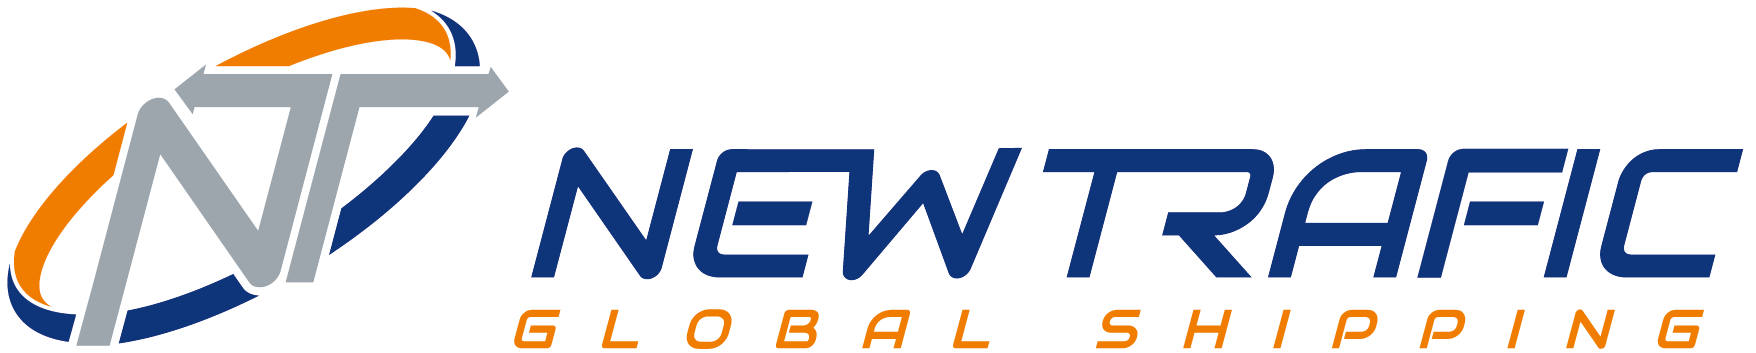 Logotipo New Trafic